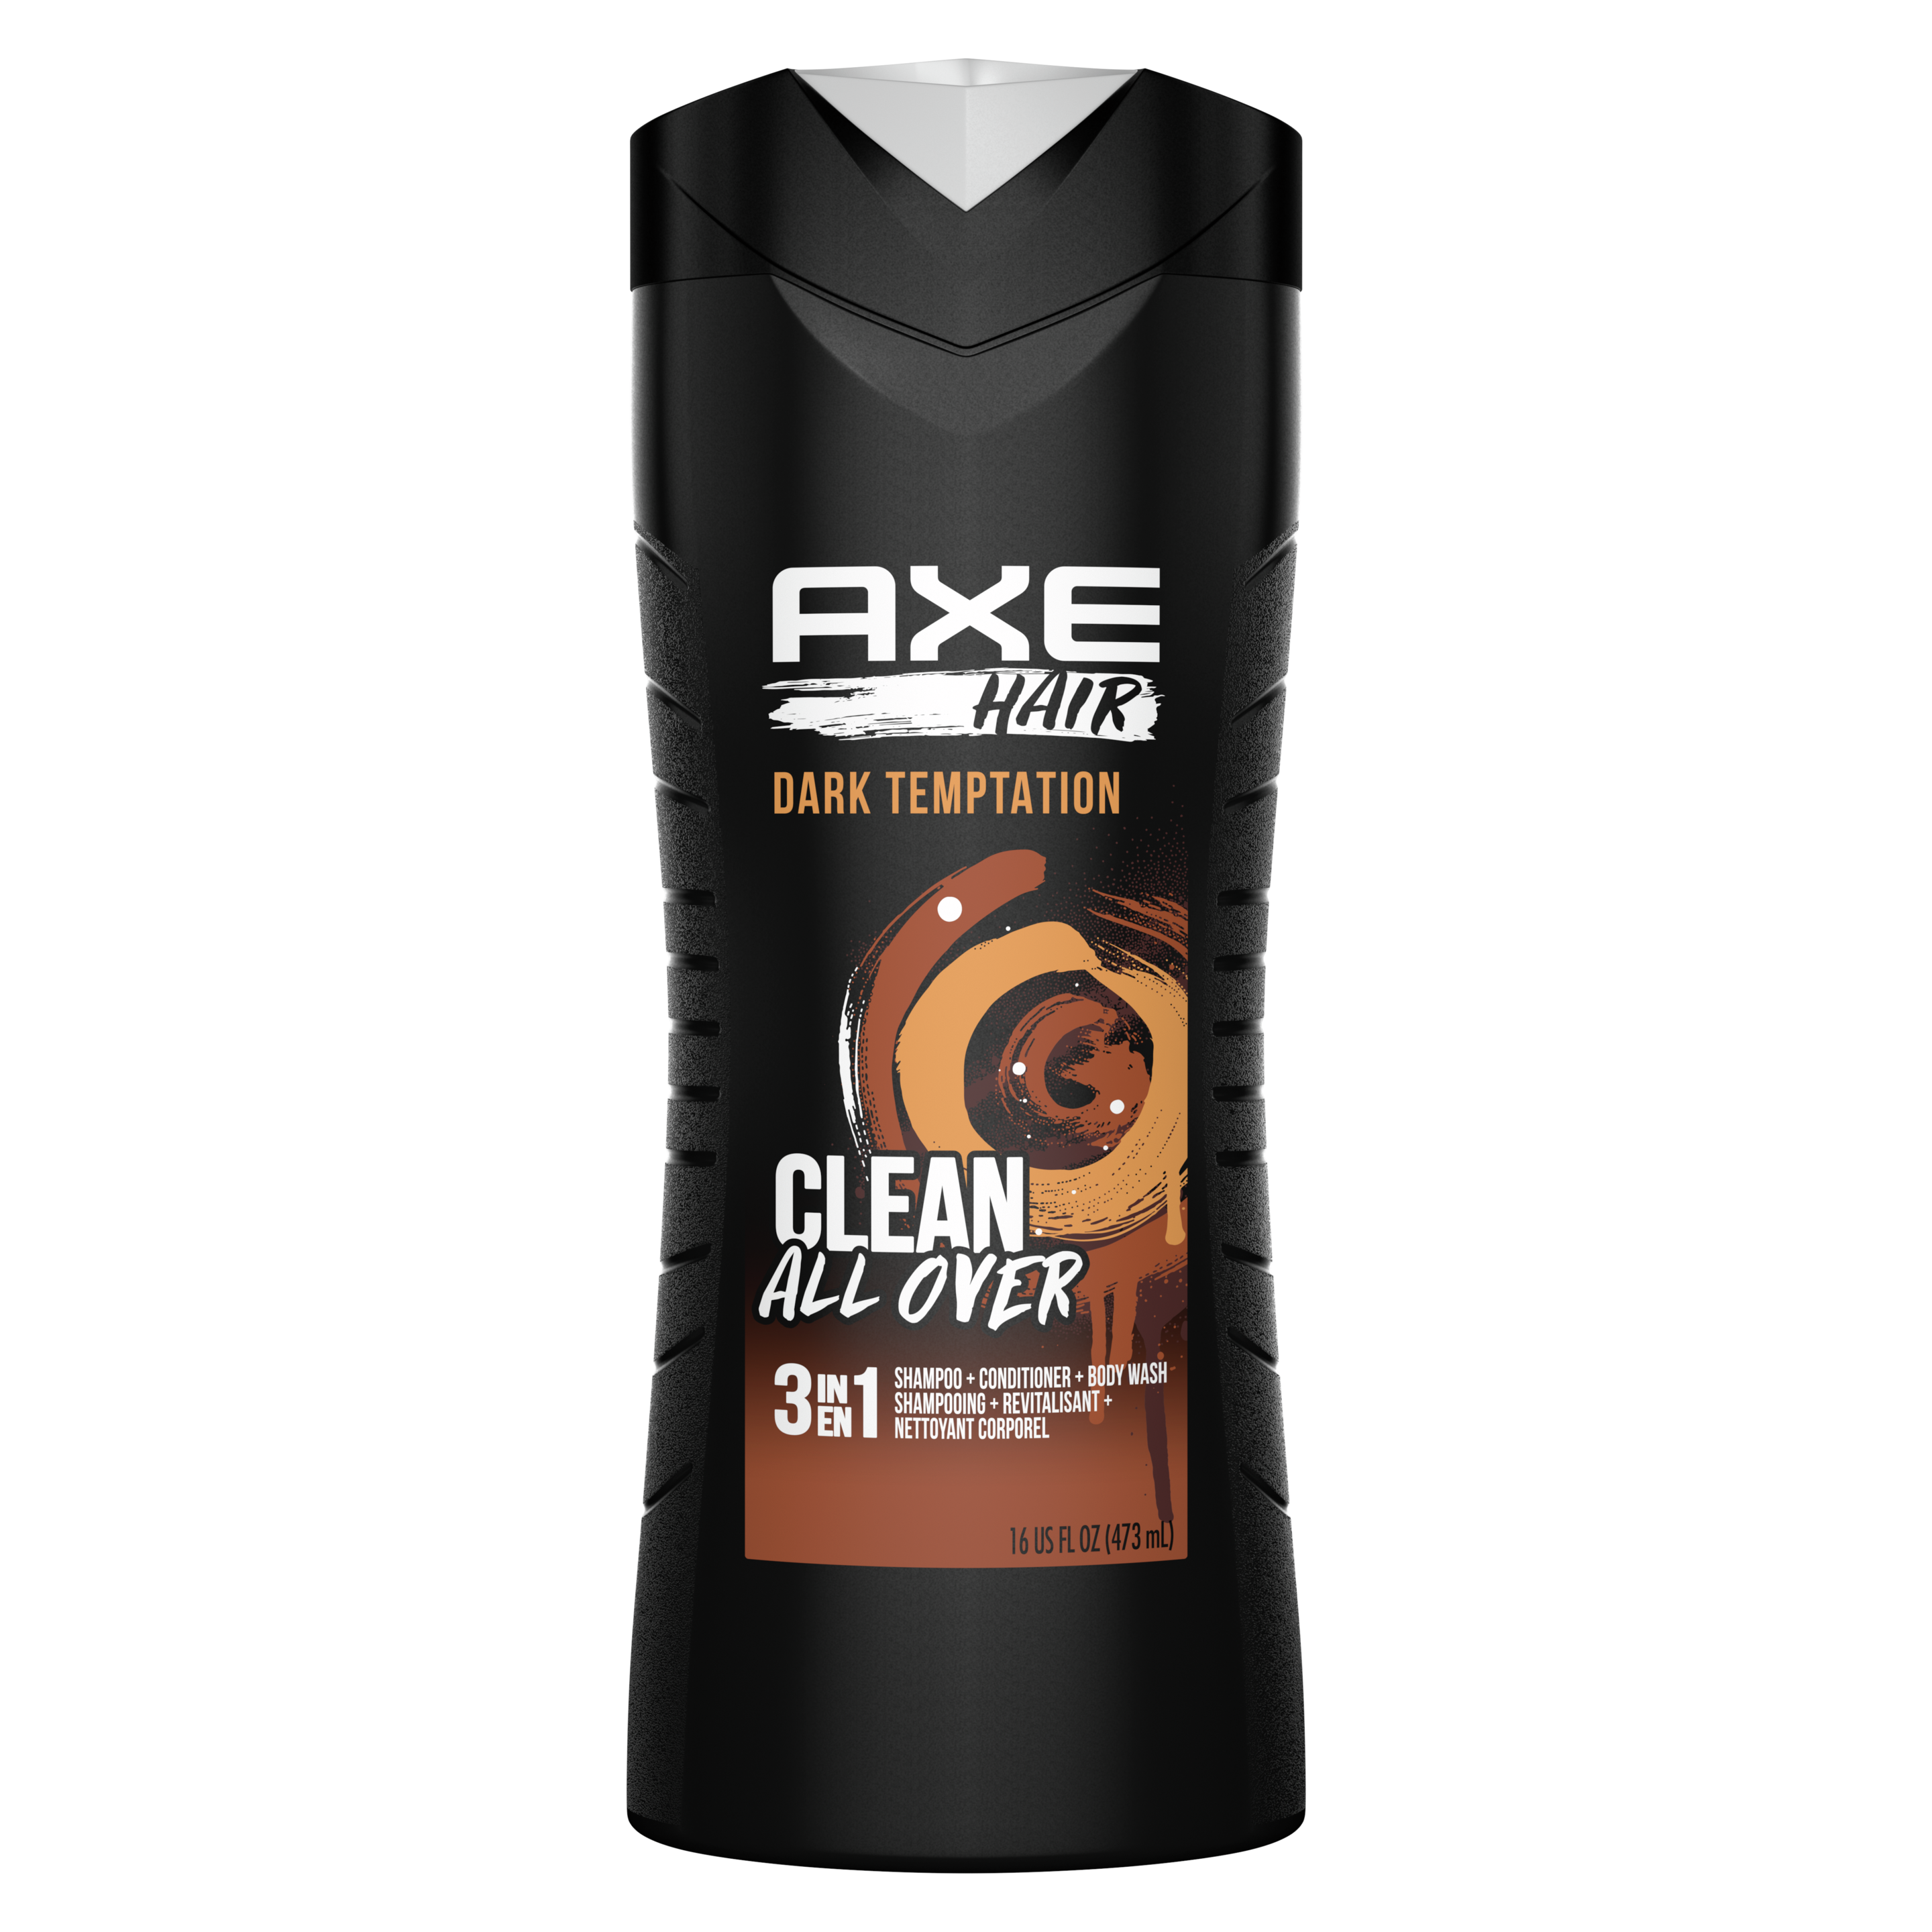 AXE Hair Dark Temptation 3-in-1 Shampoo, Conditioner and Body Wash